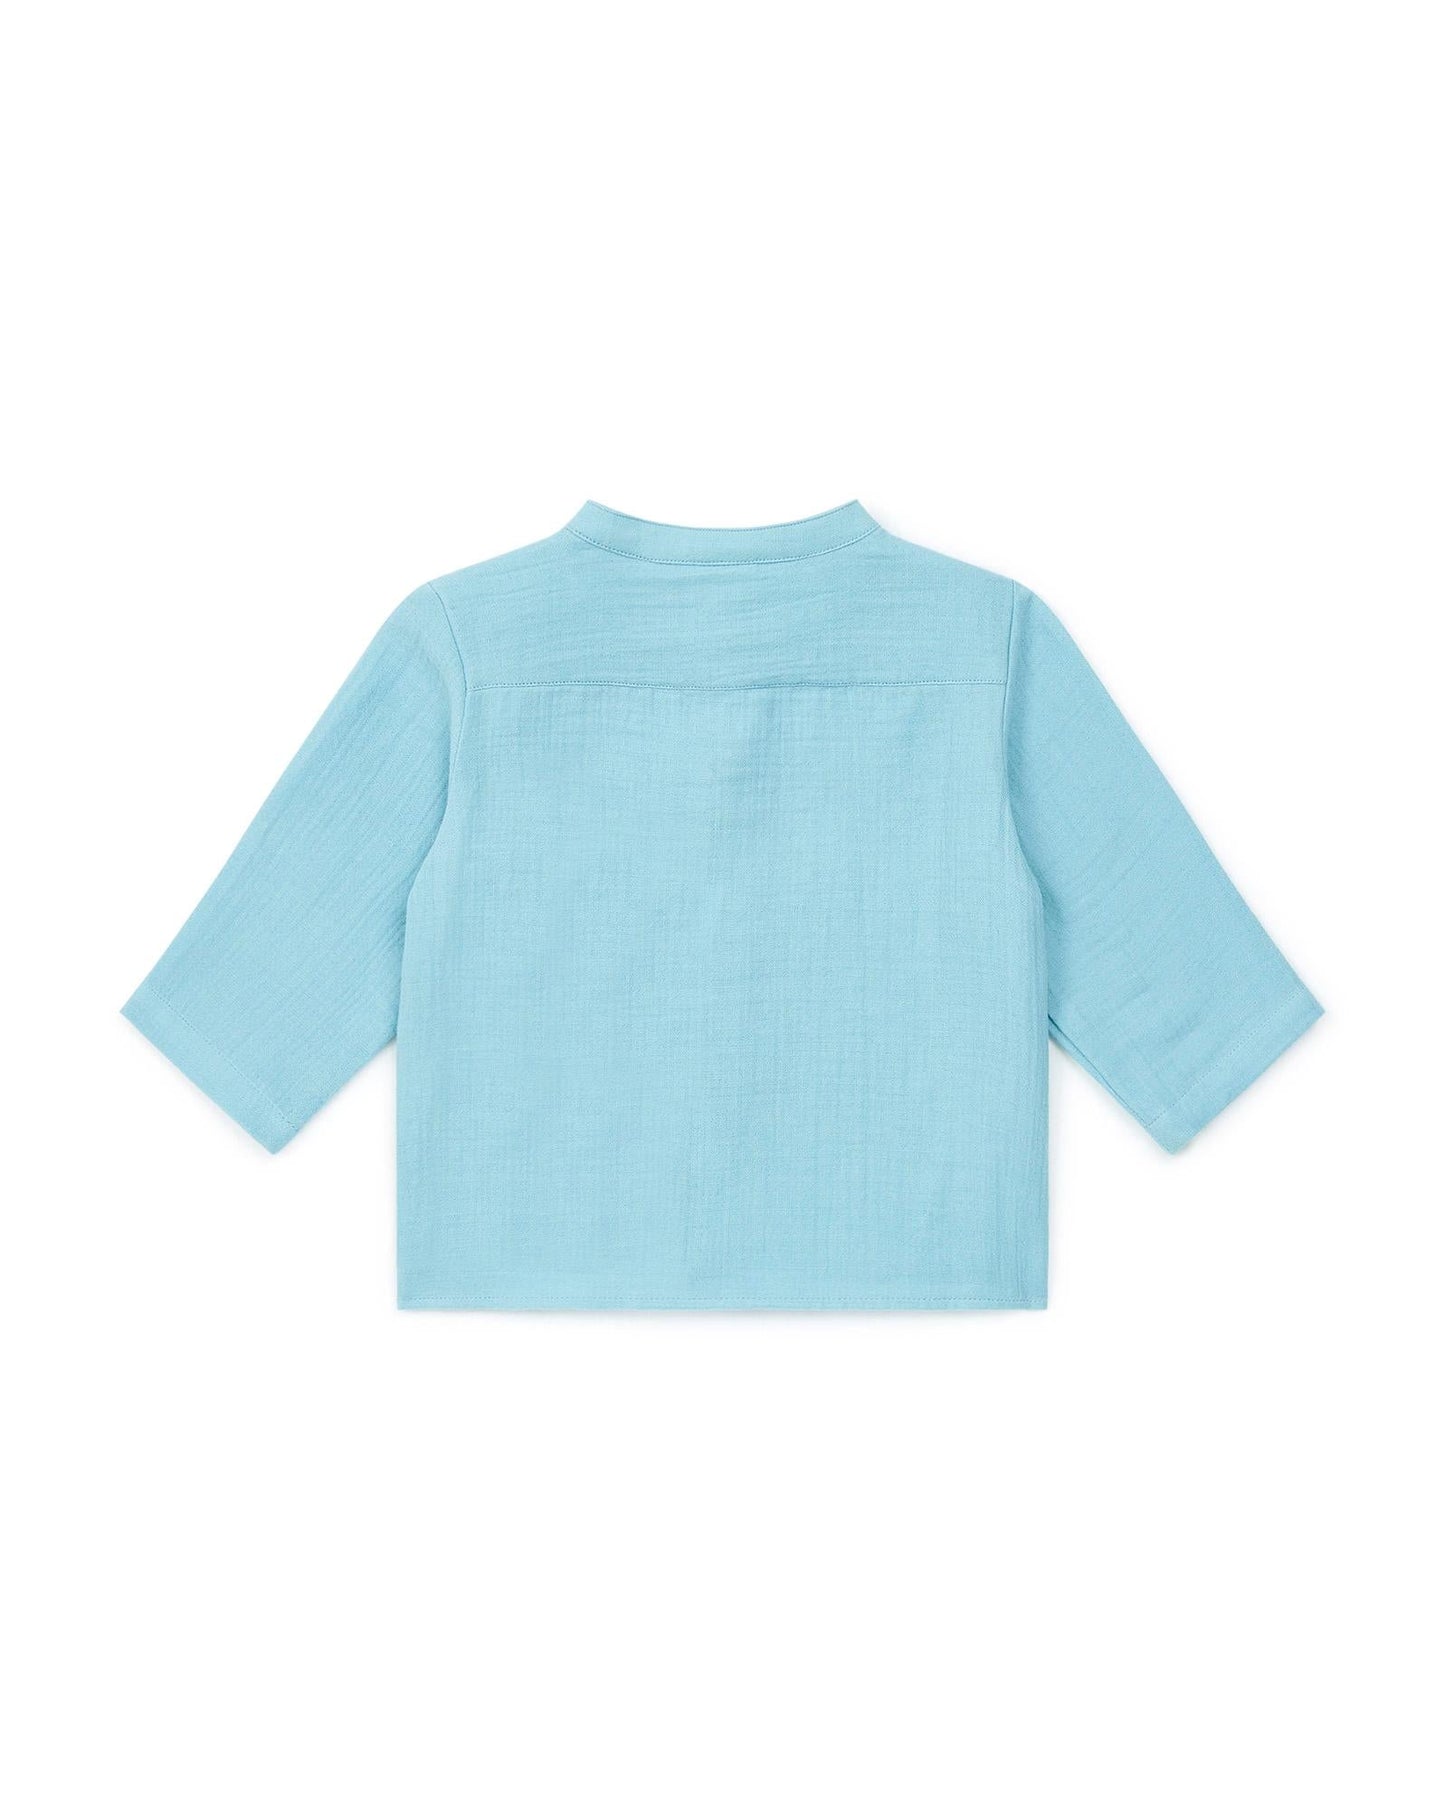 Shirt Inter Bleue Baby In 100% organic cotton gauze certified GOTS